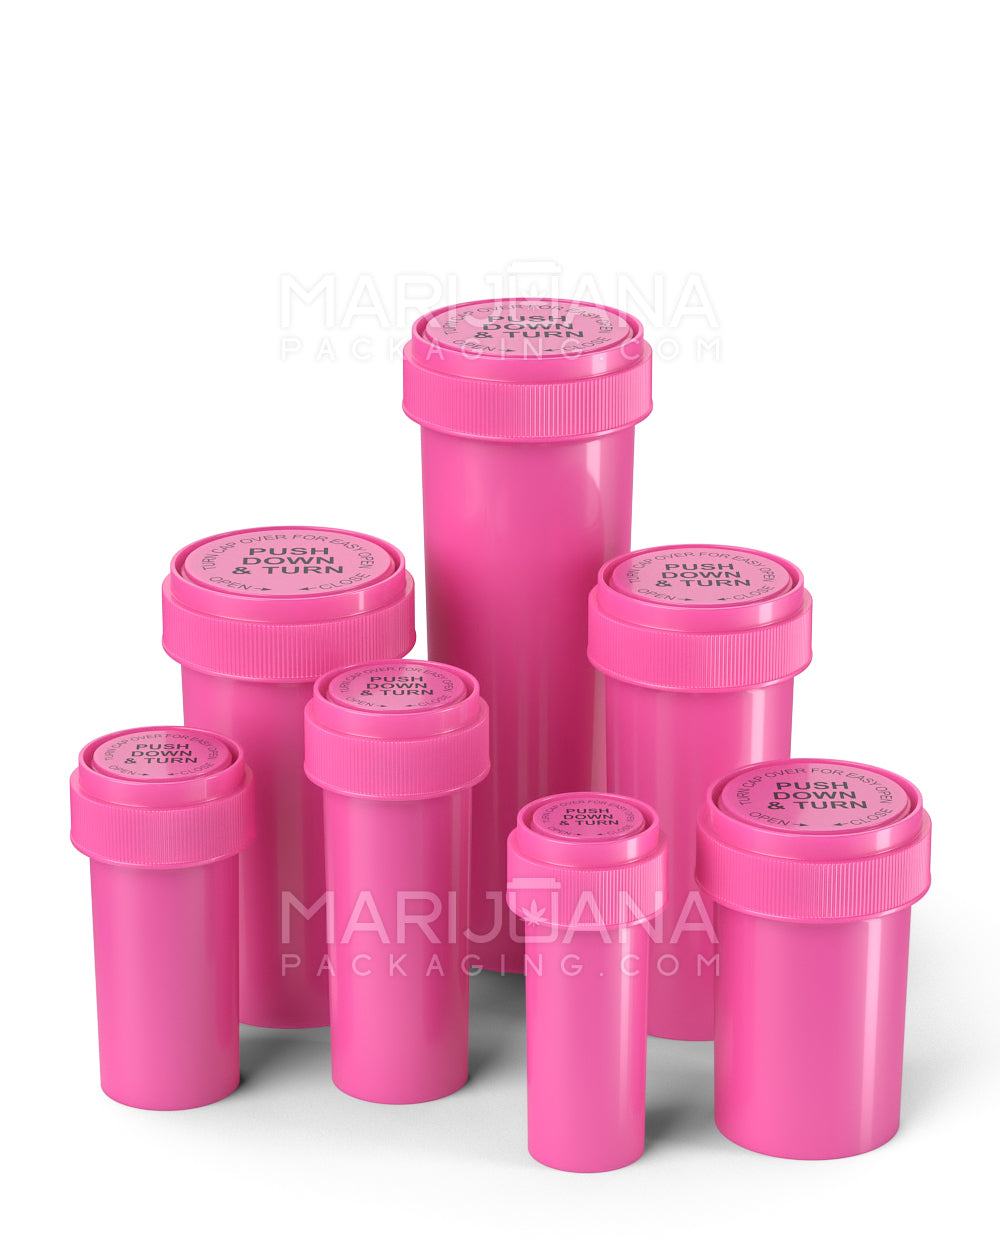 Child Resistant | Opaque Pink Reversible Cap Vials | 20dr - 3.5g - 240 Count - 10